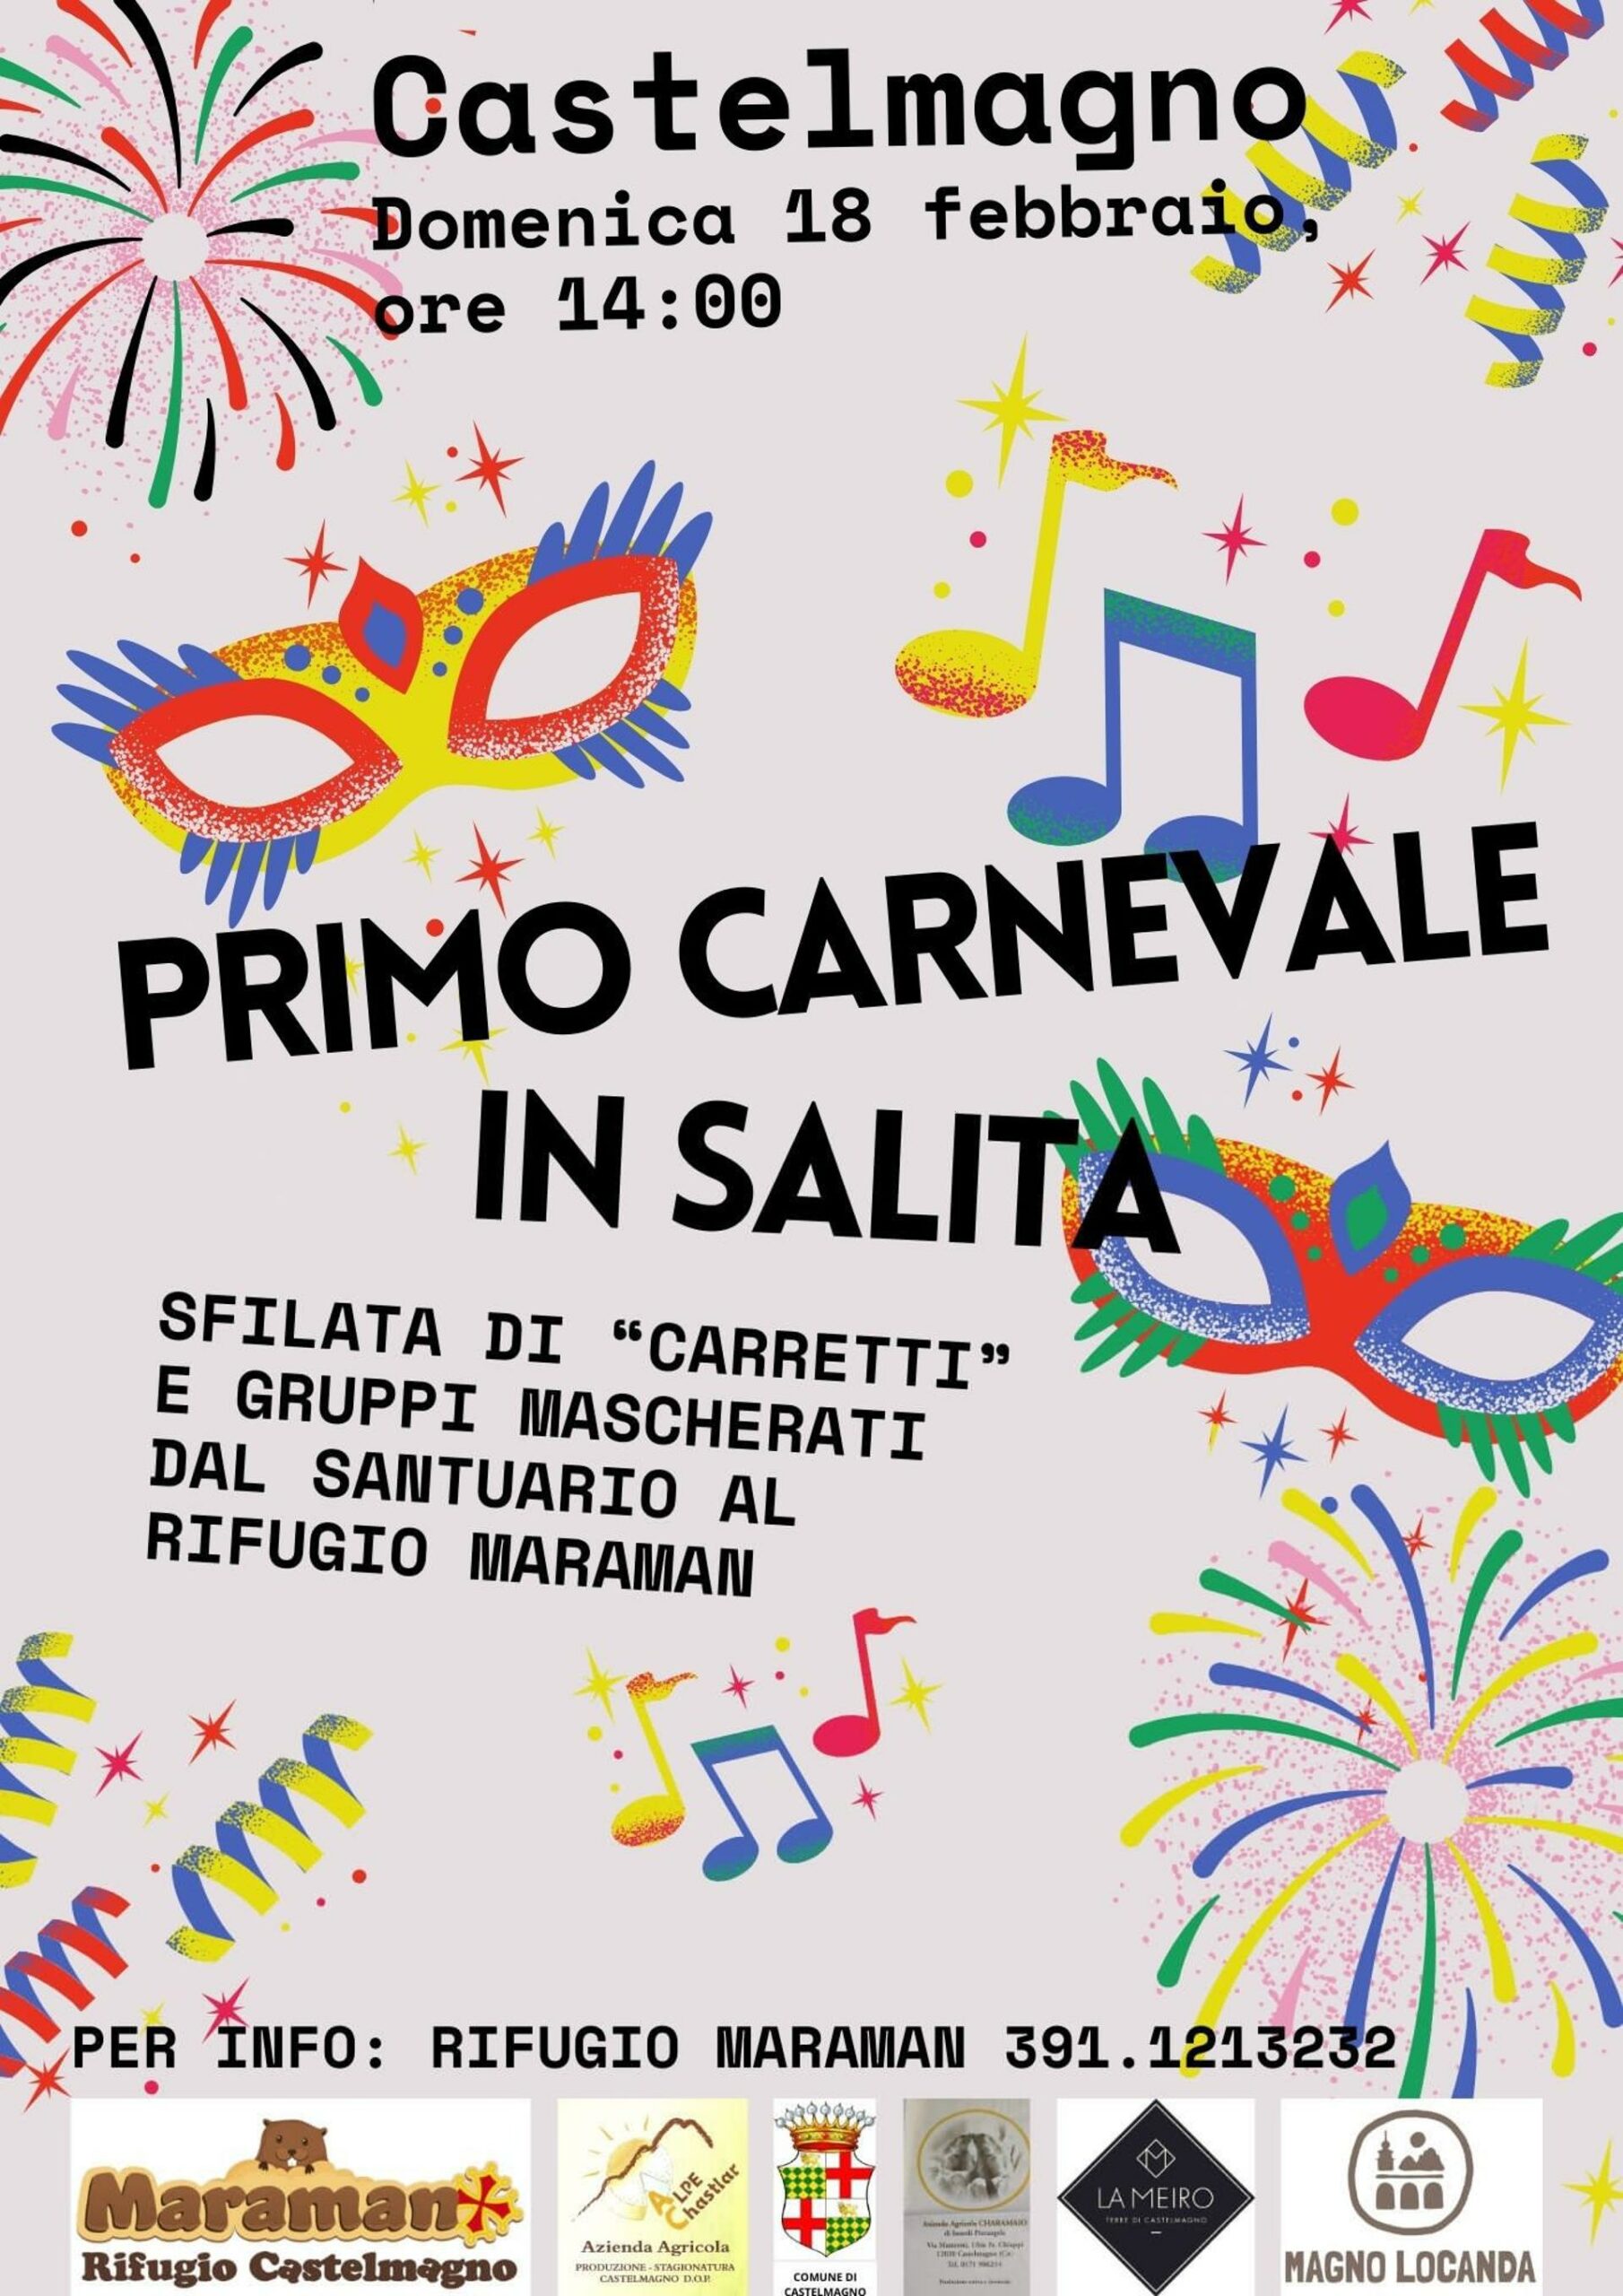 Carnevale in salita a Castelmagno